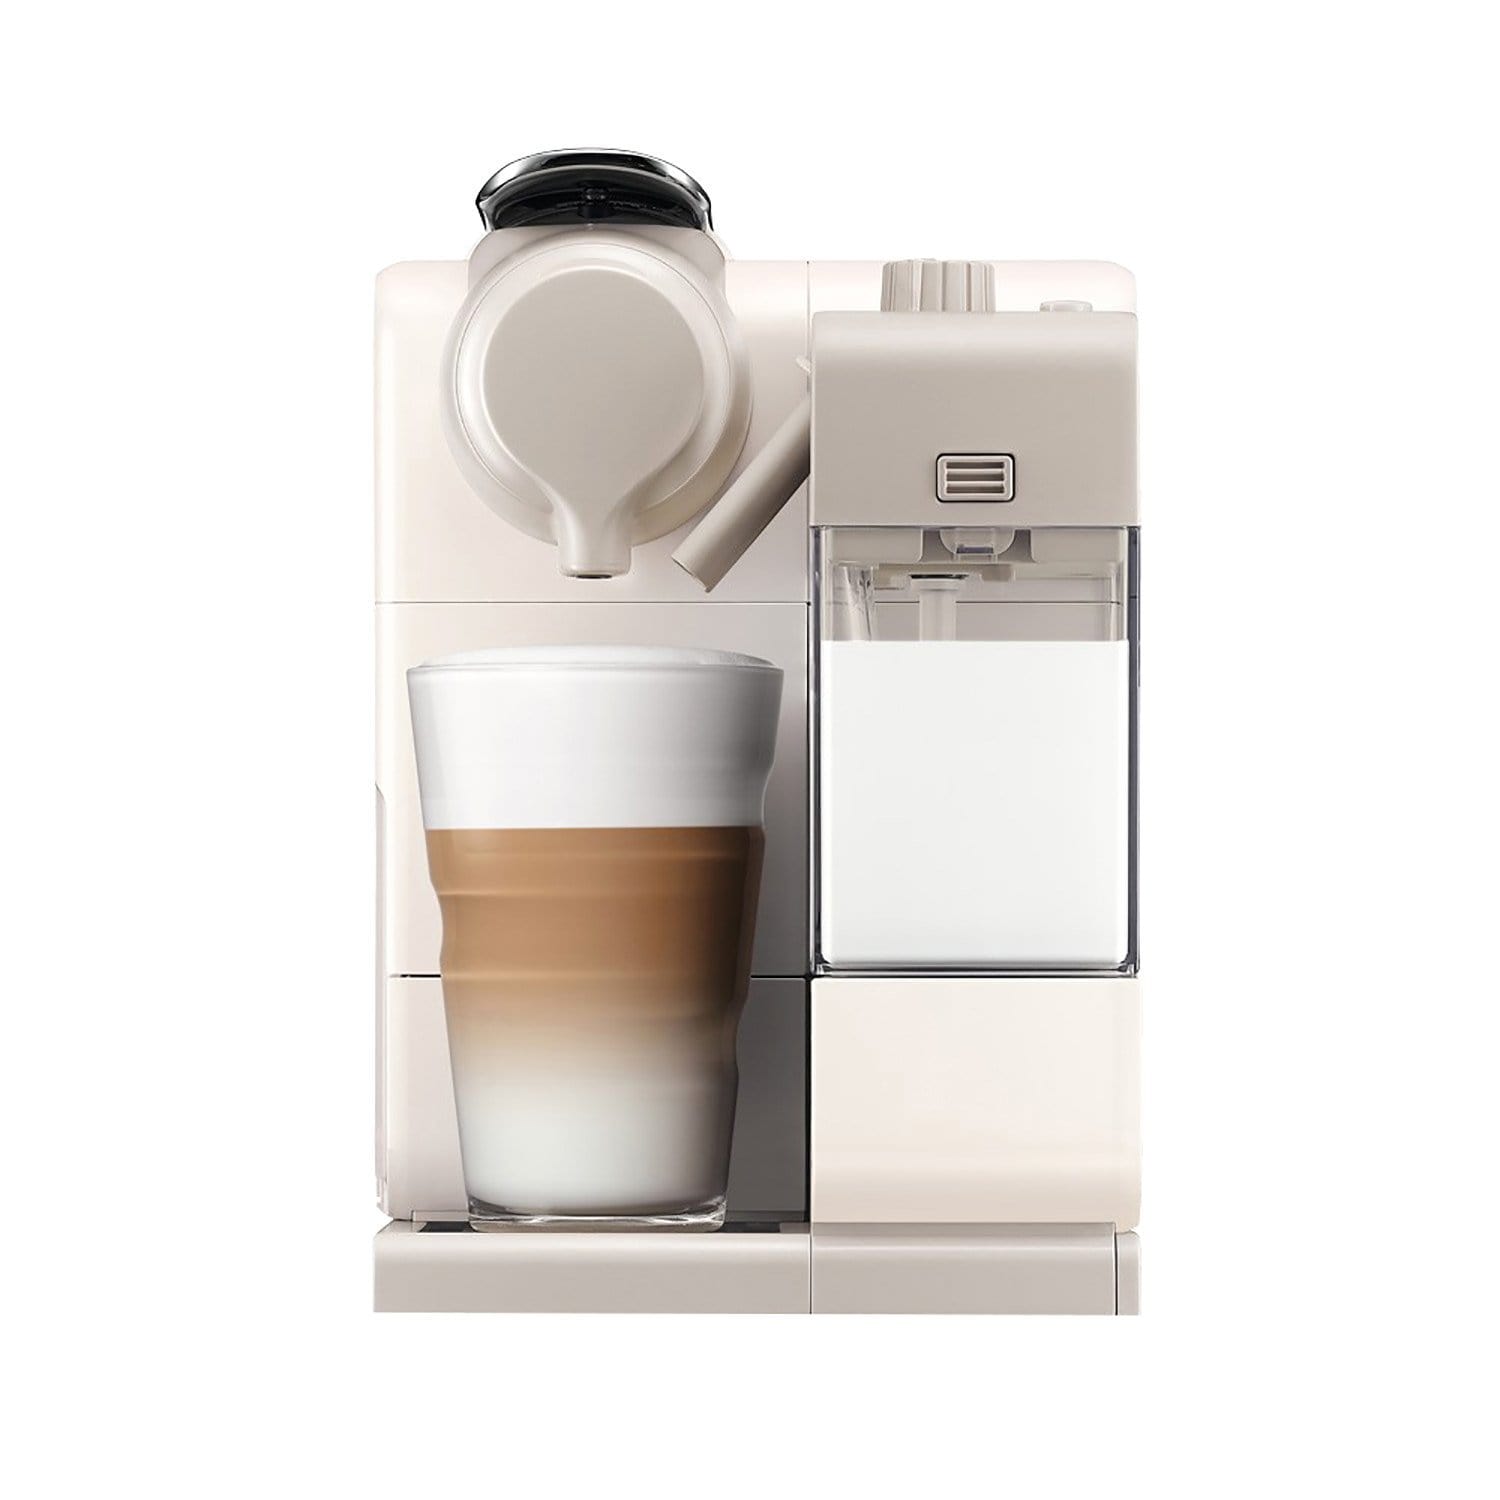 Nespresso ماكينة تحضير القهوة - أبيض - F521-ME-WH-NE - جاشنمال هوم